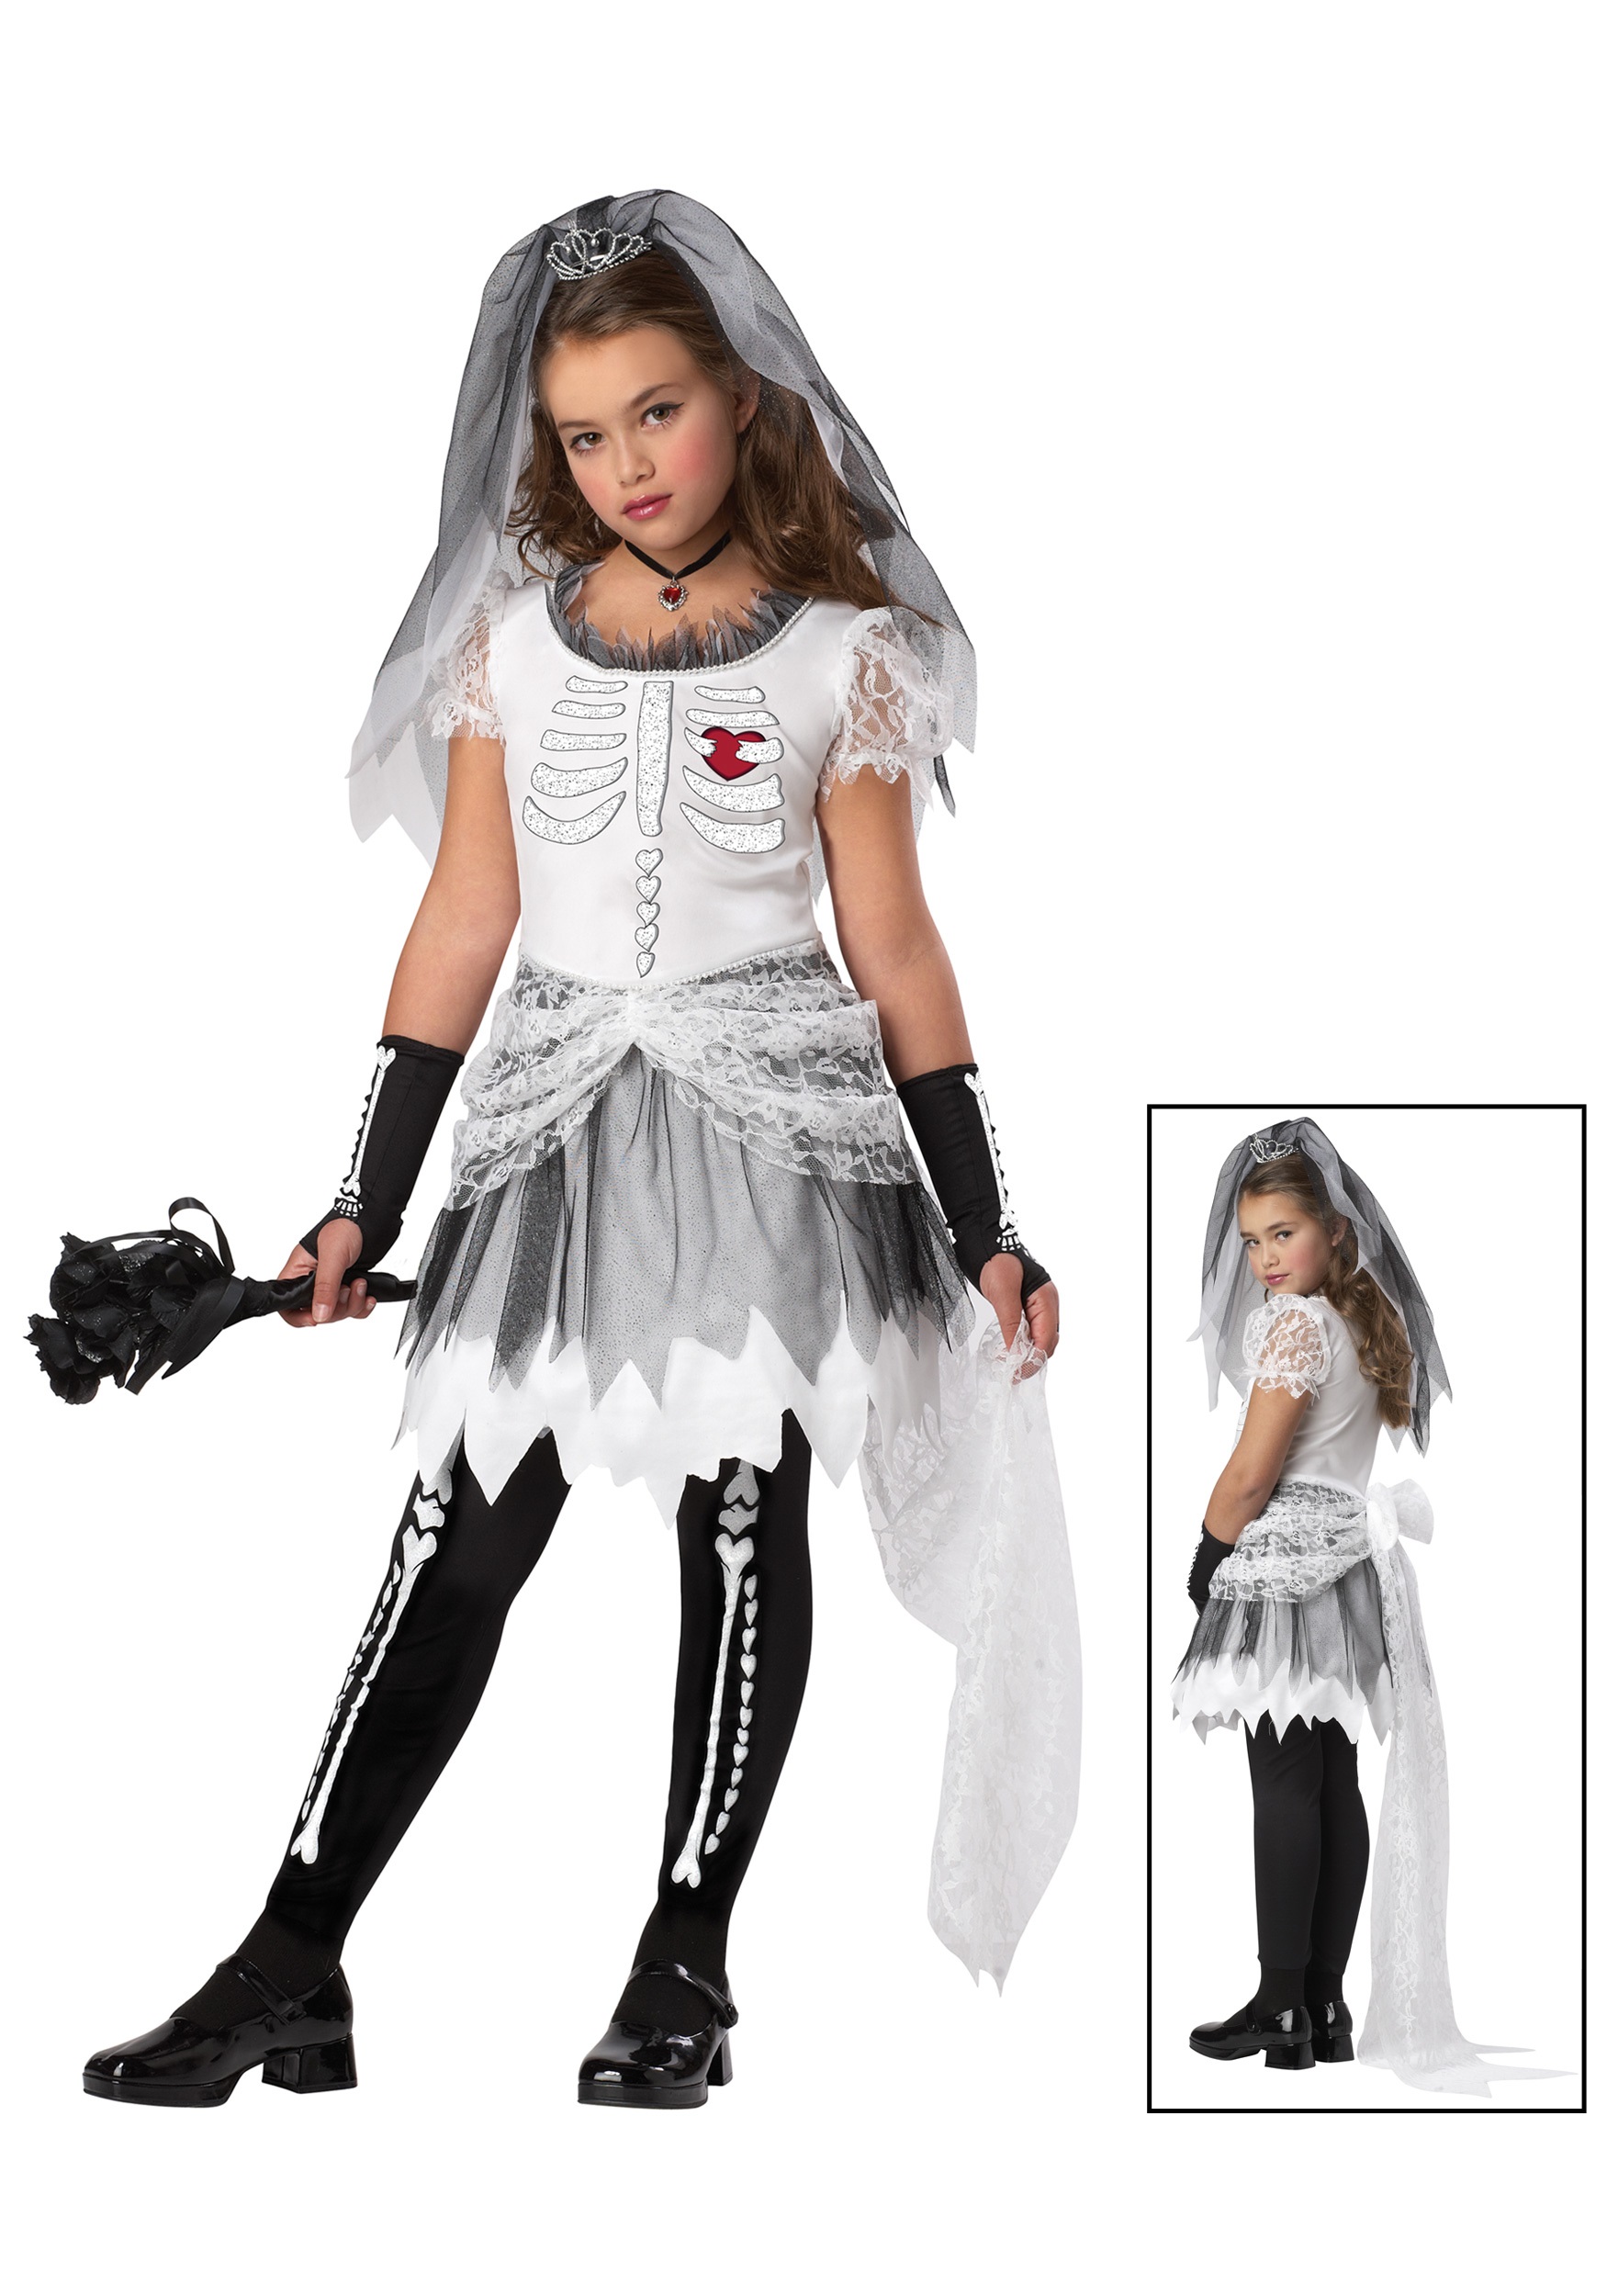 Какой костюм можно. Наряд на Хэллоуин для девочки. Костюмы на Хэллоуин для детей. Костюмы на Хэллоуин для Дево. Костюмы для девочек на Хелло.